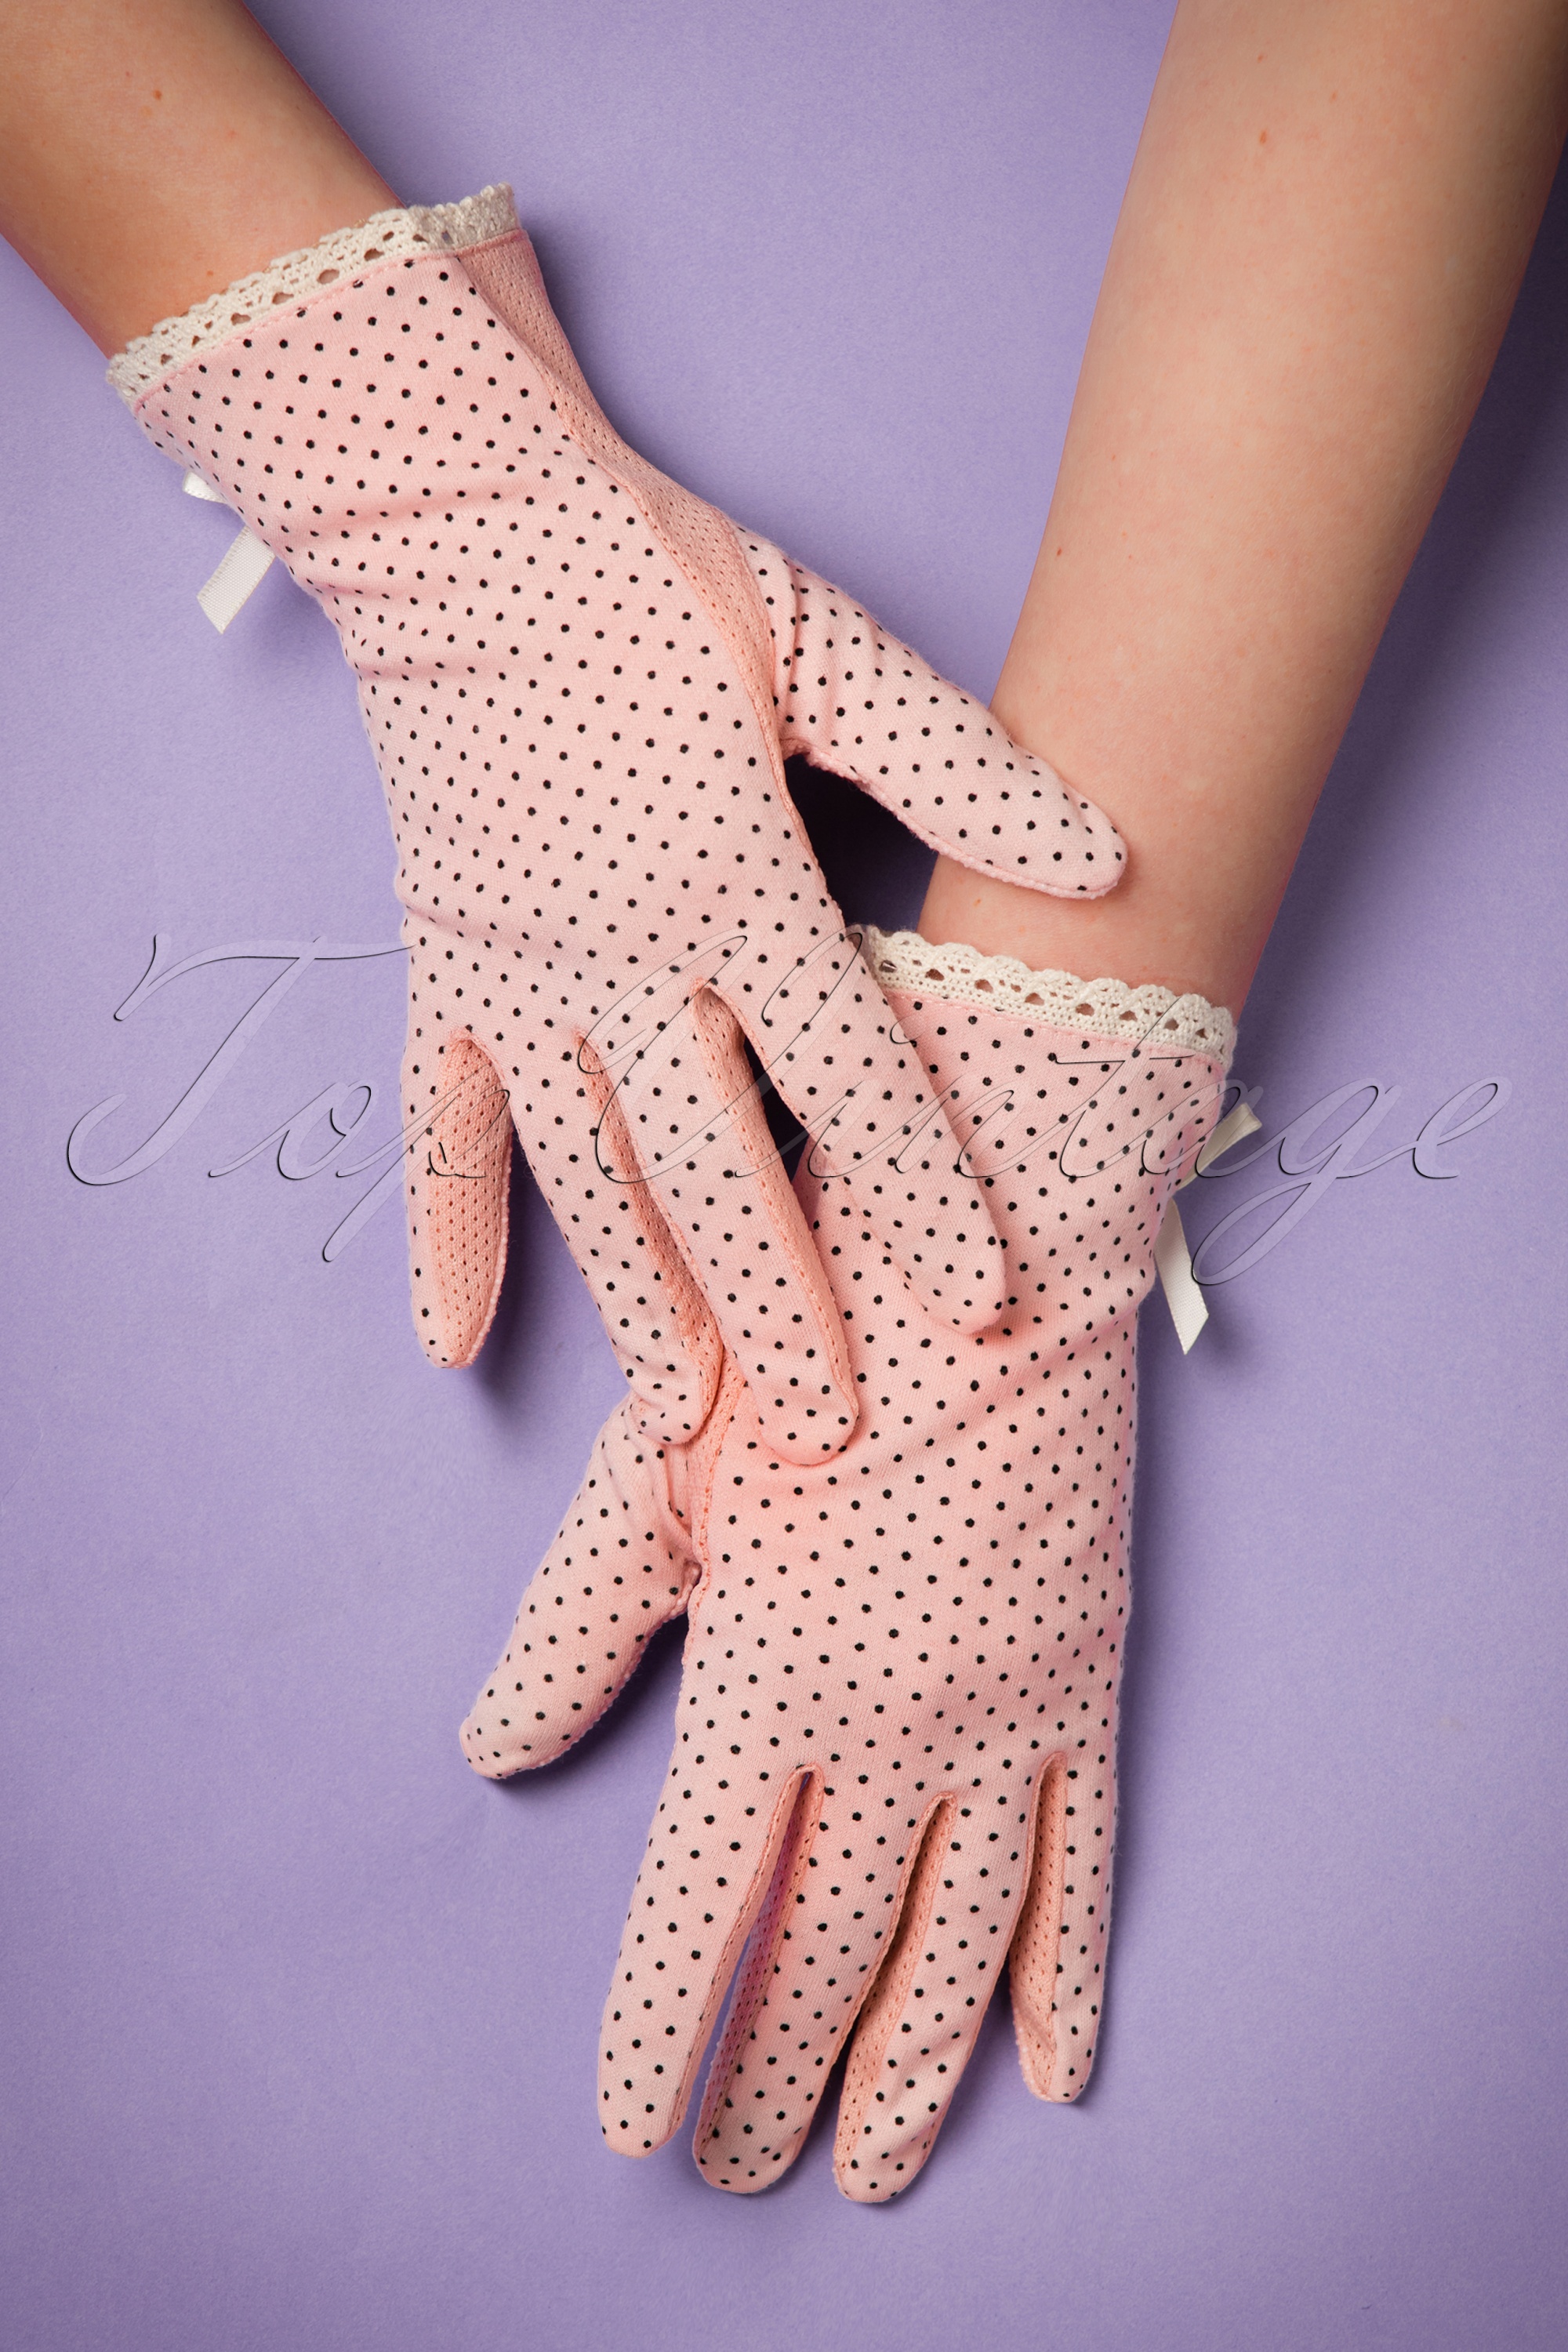 Collectif Clothing - Christine Polka armbandhandschoenen in roze